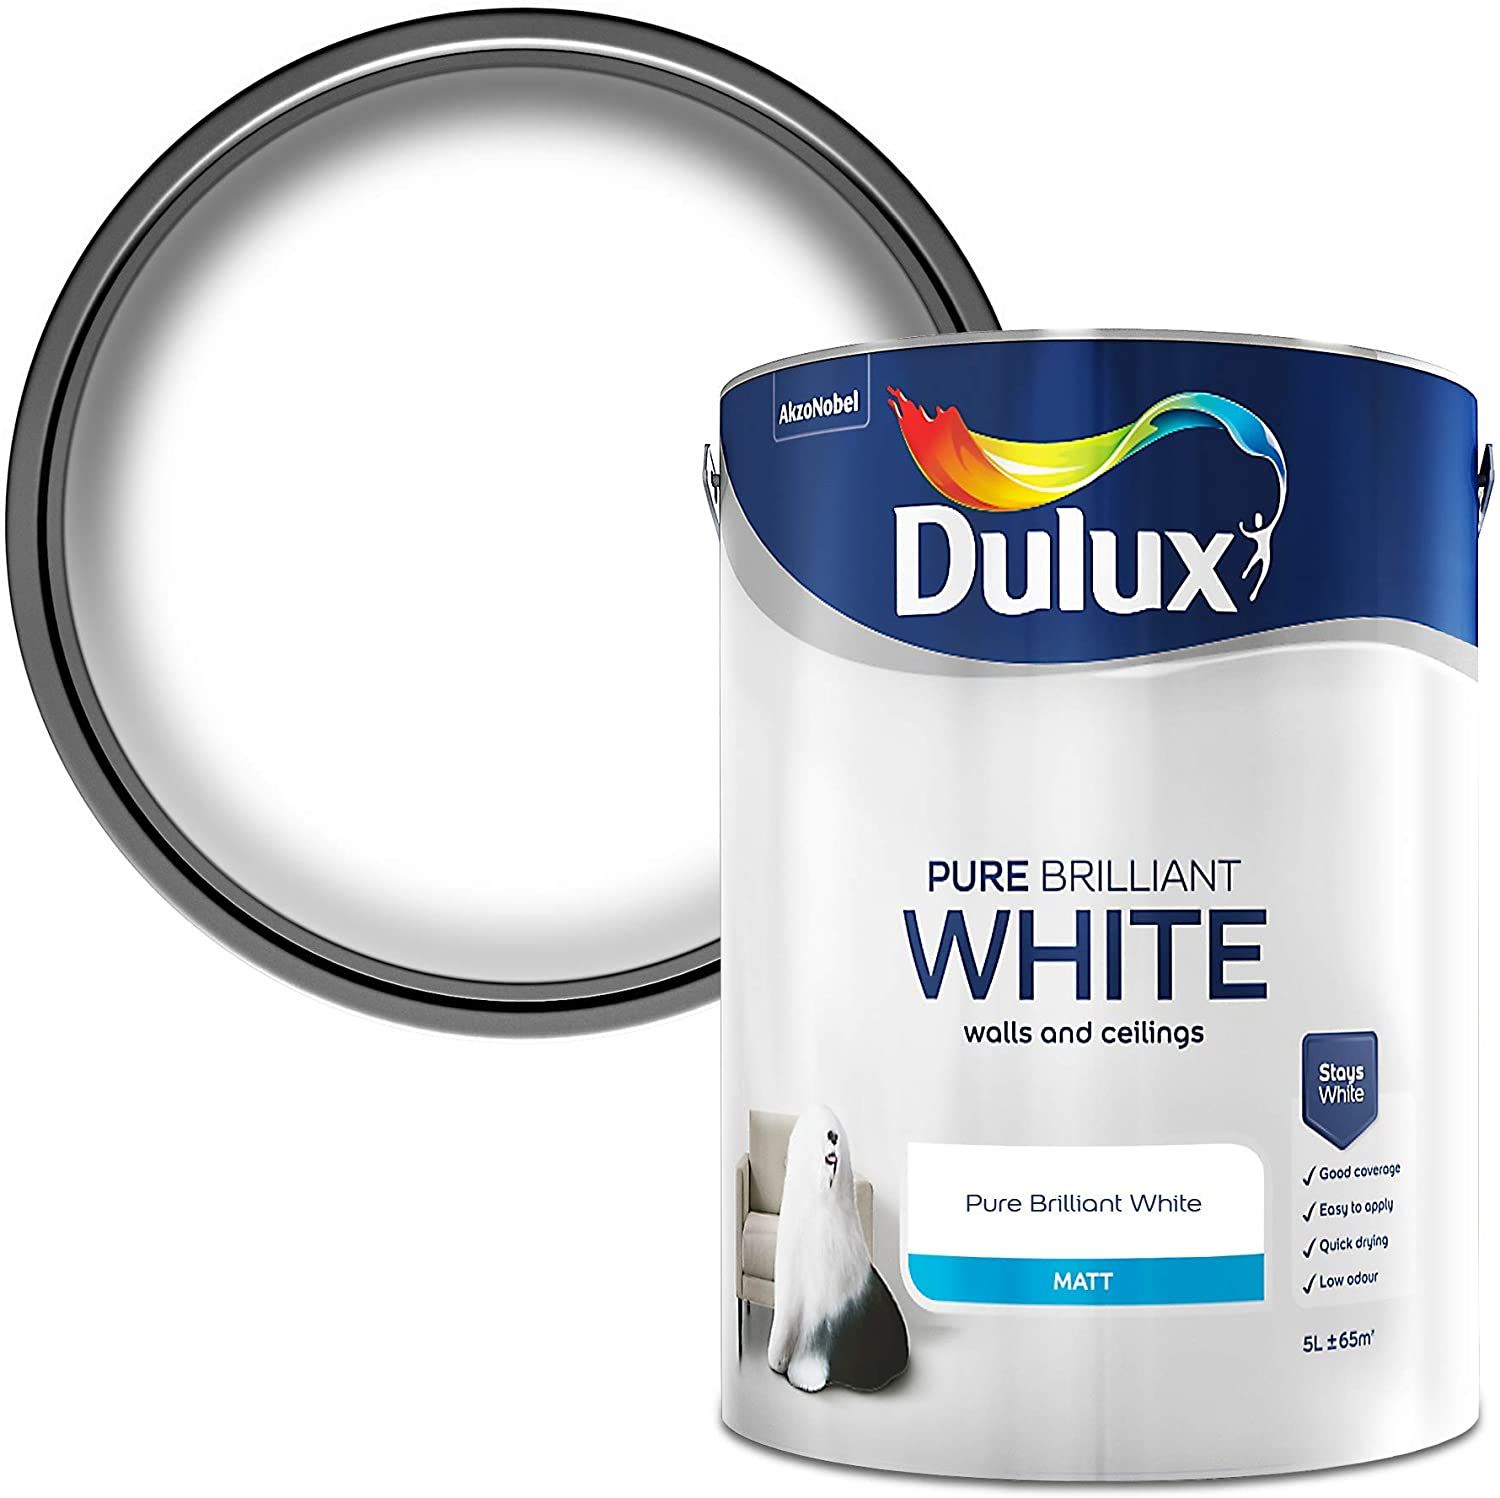 La millor pintura en emulsió blanca de Dulux en general